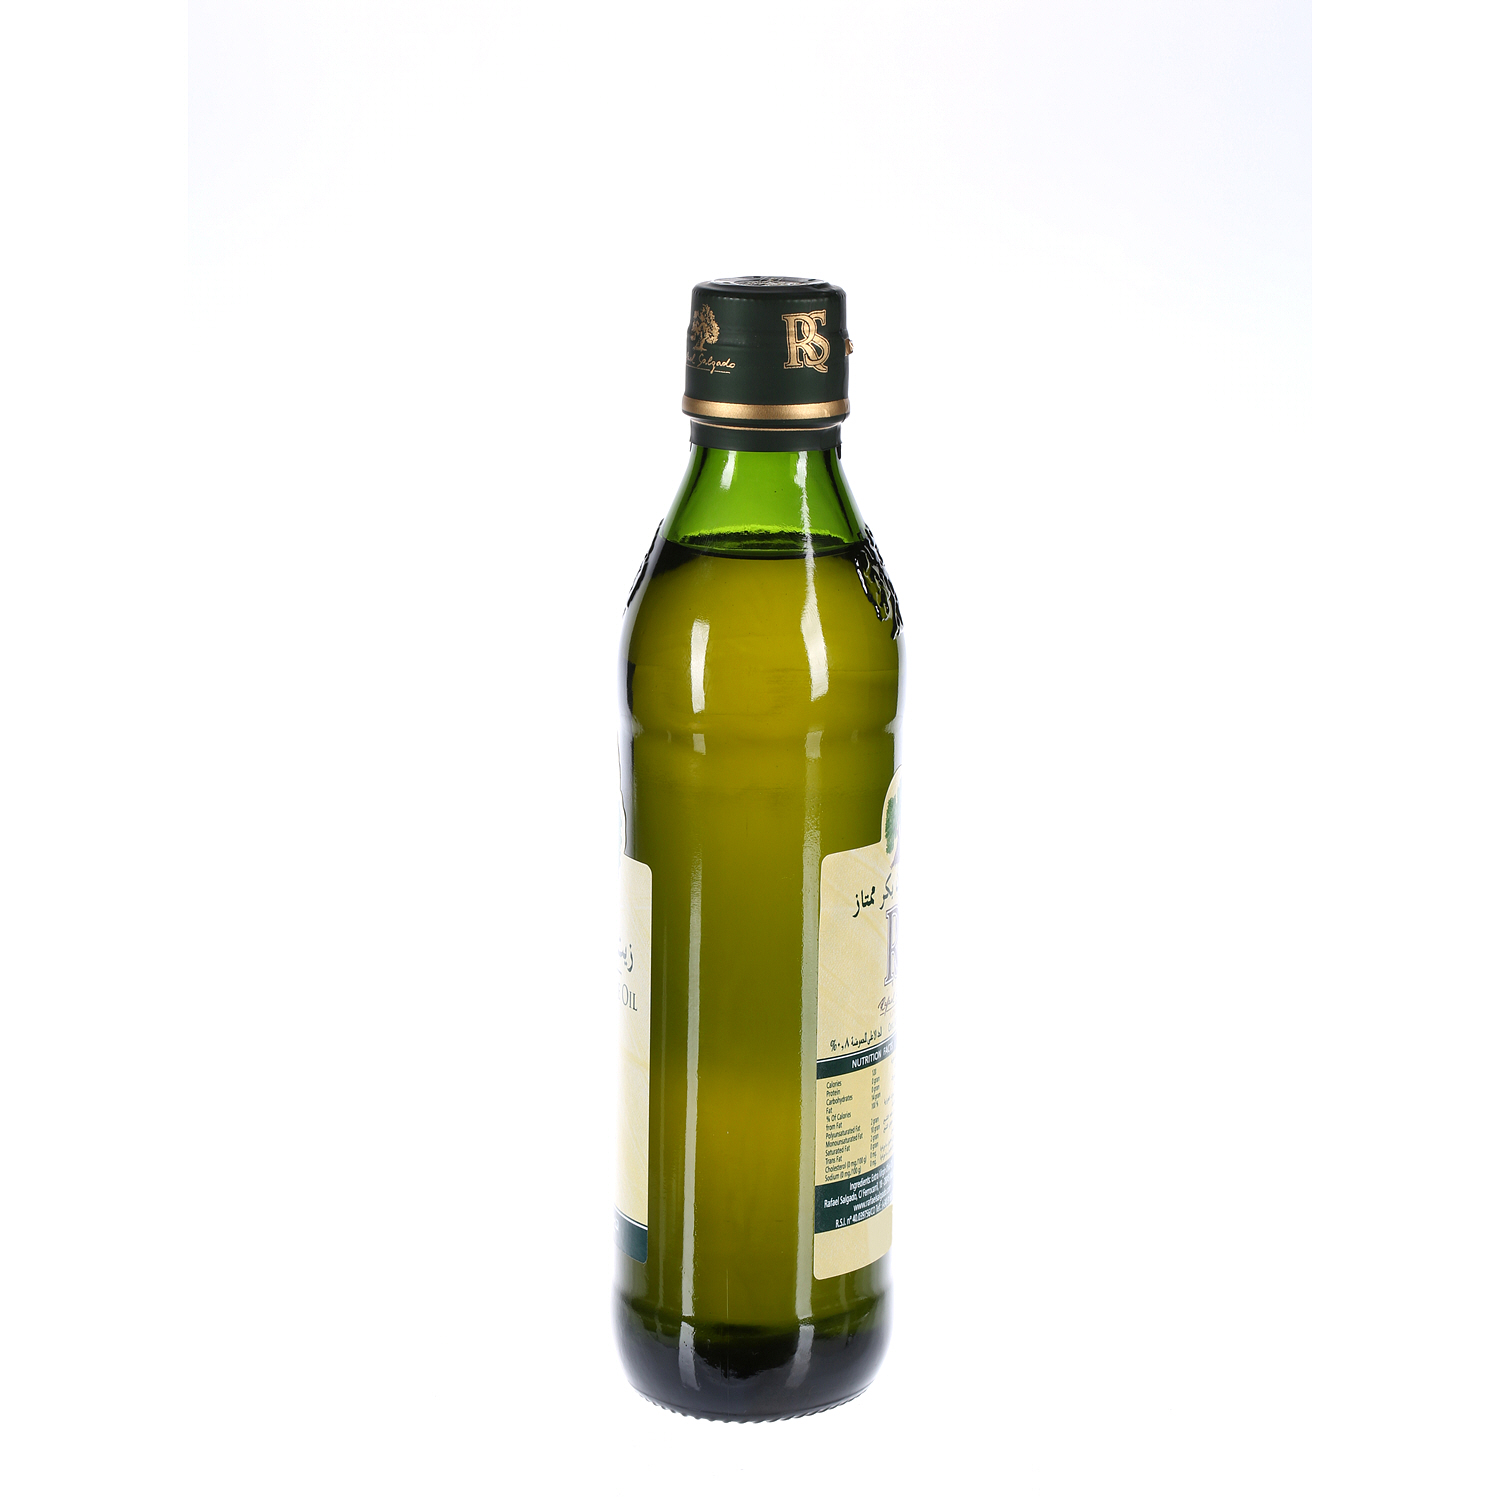 Rafael Salgado Extra Virgin Olive Oil 500ml